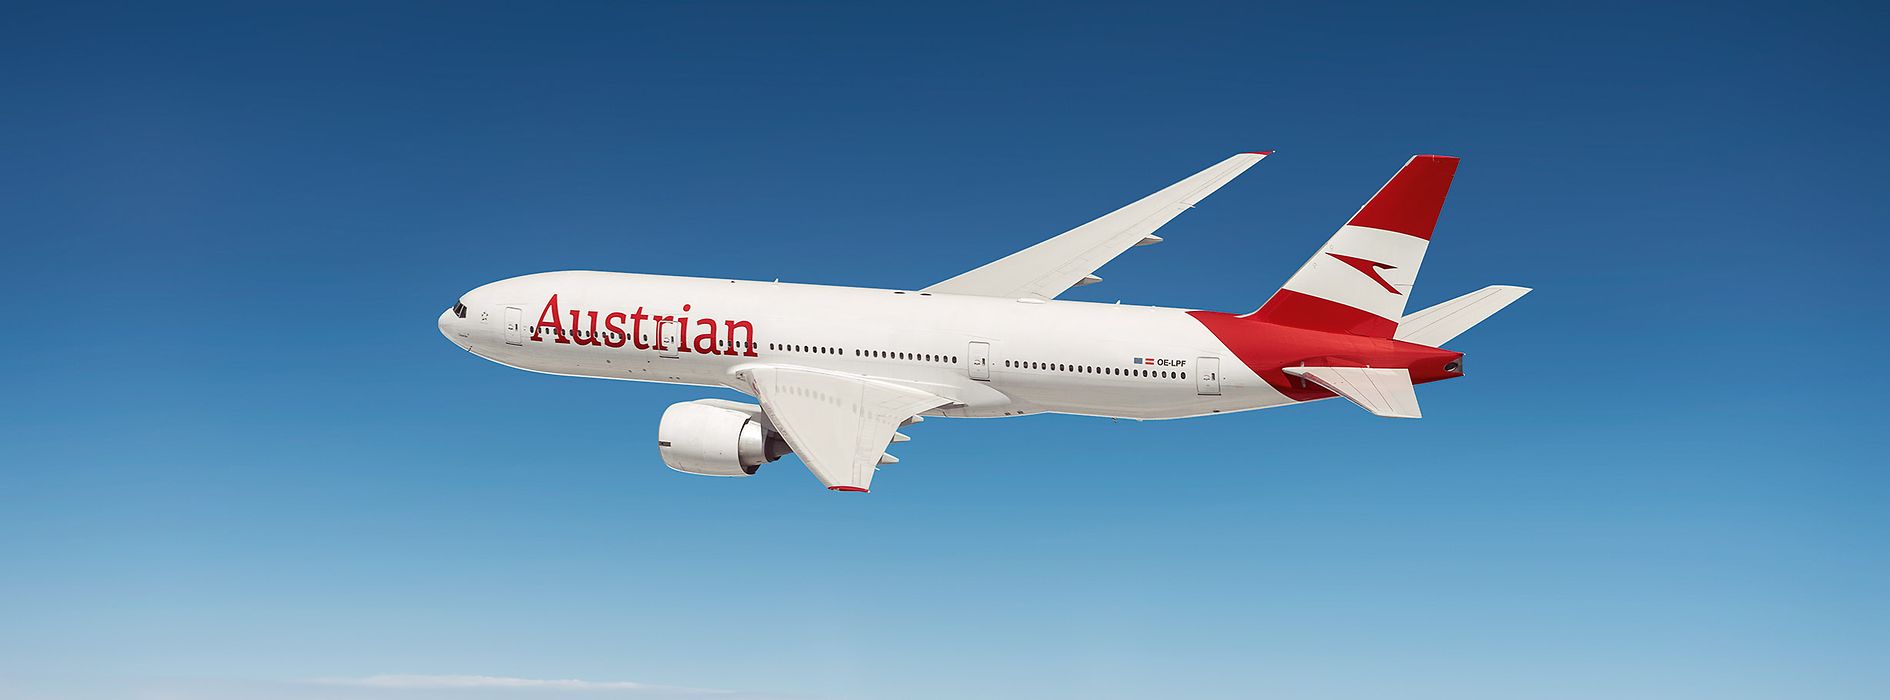 Letadlo společnosti Austrian Airlines